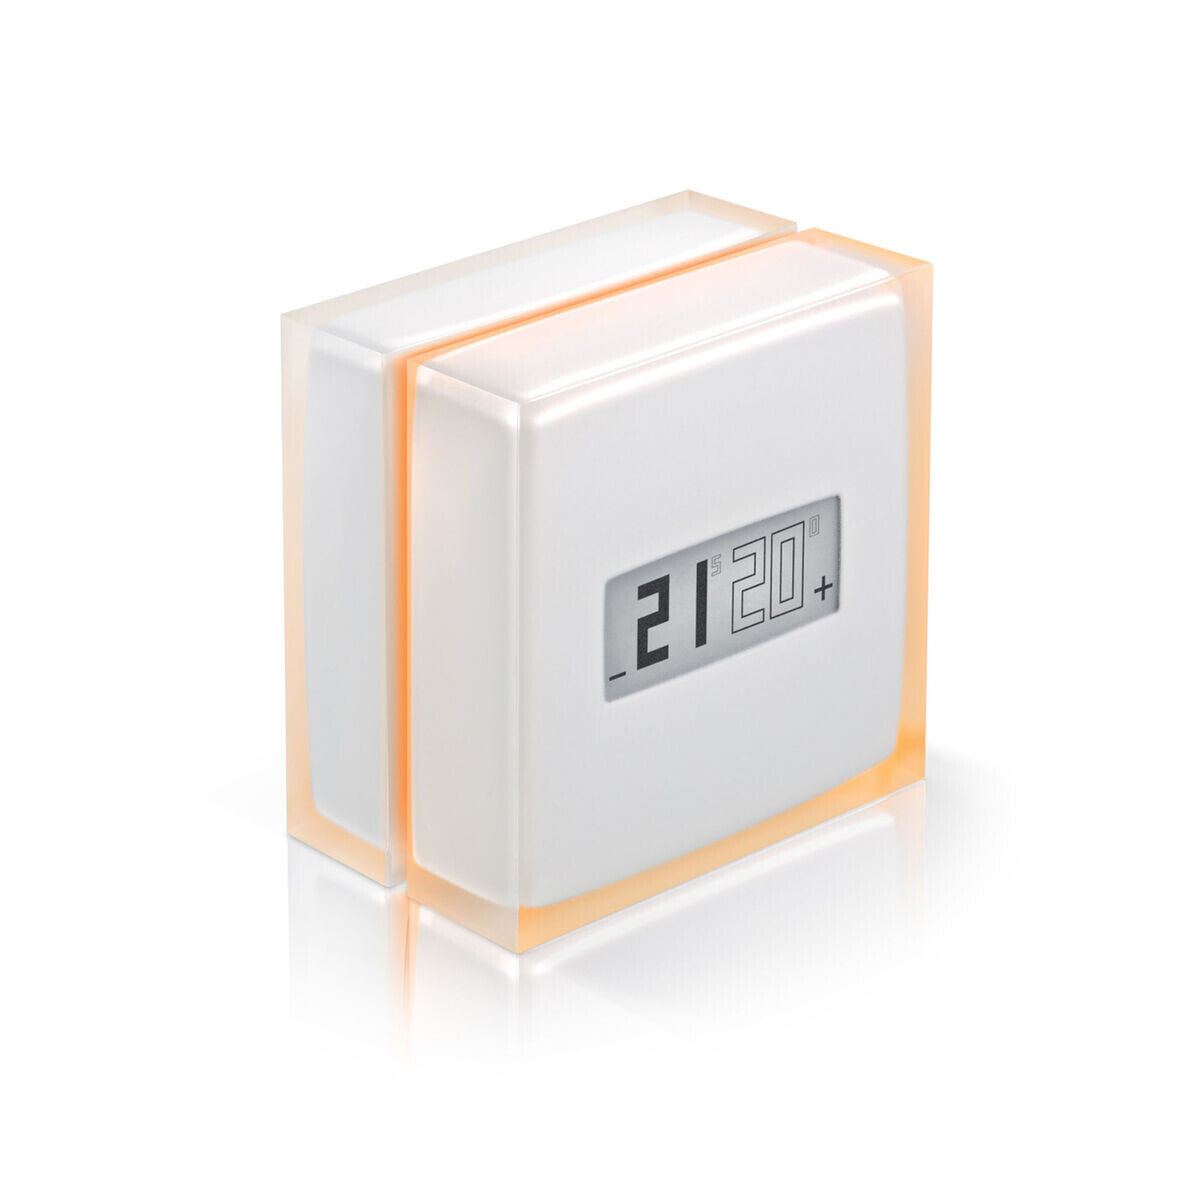 Thermostat Netatmo NTH01-EN-EU White Translucent